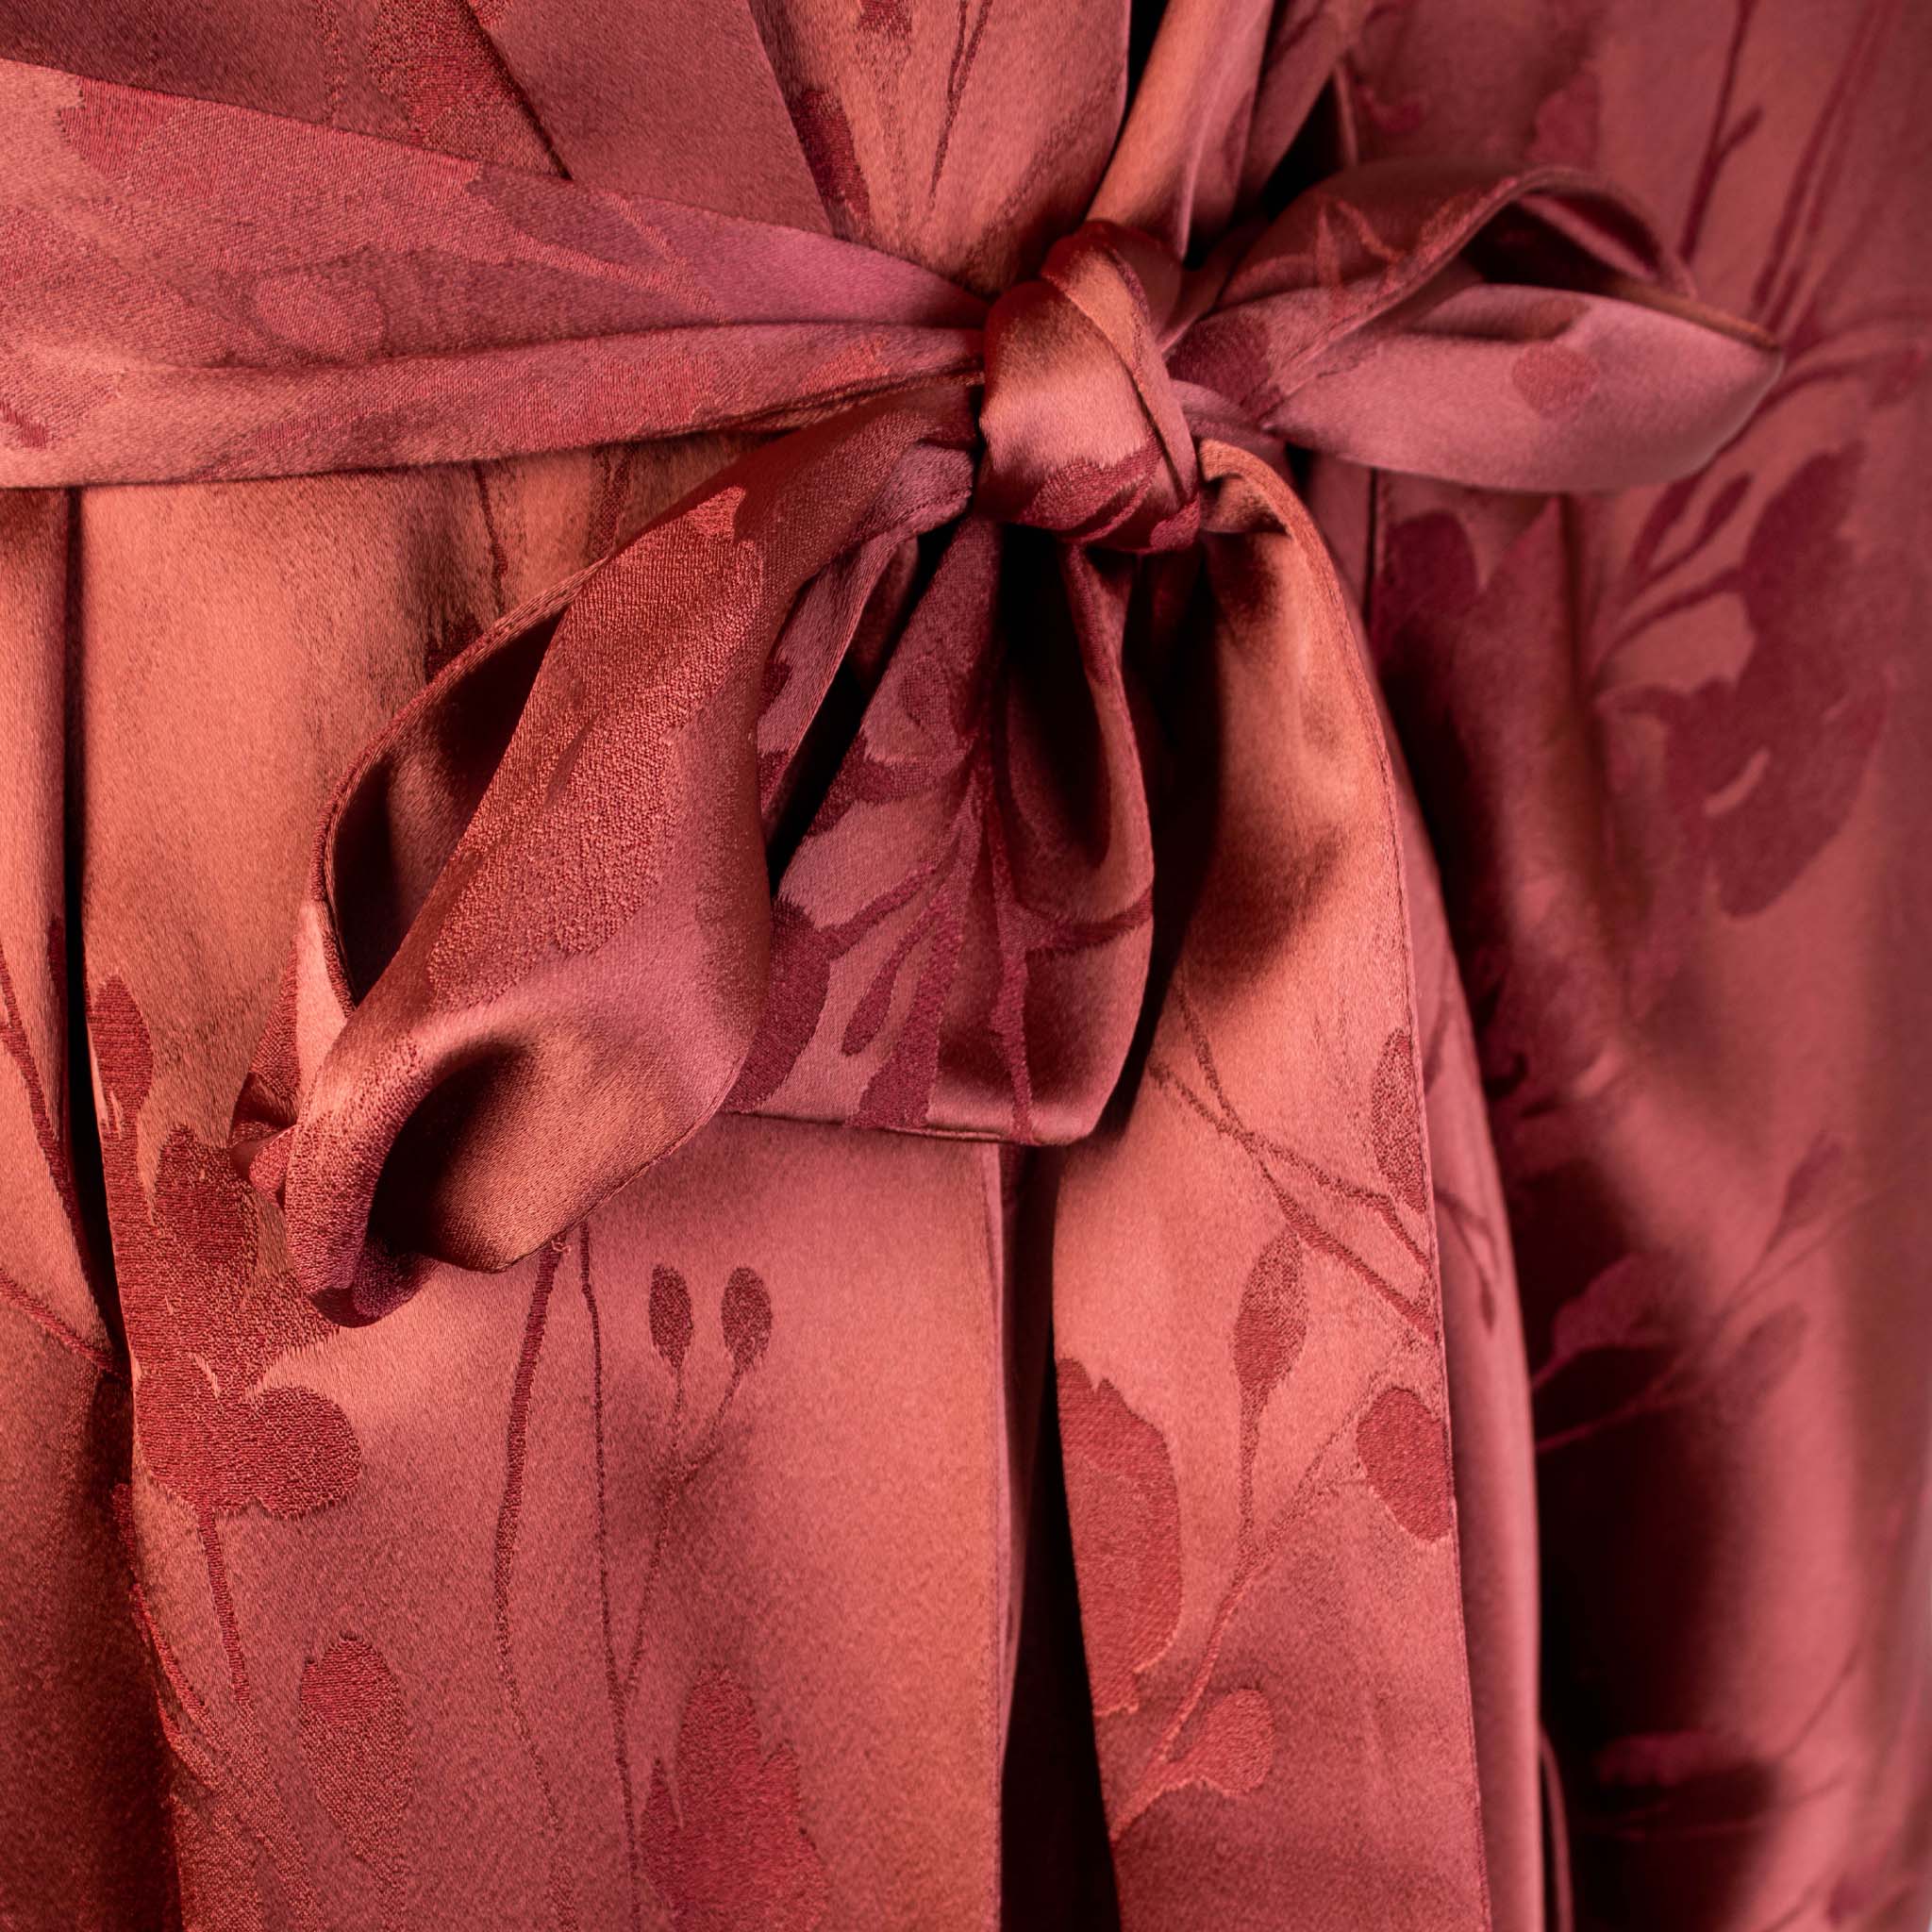 Lardini Red Allover printed robe Trench coat - Fizigo